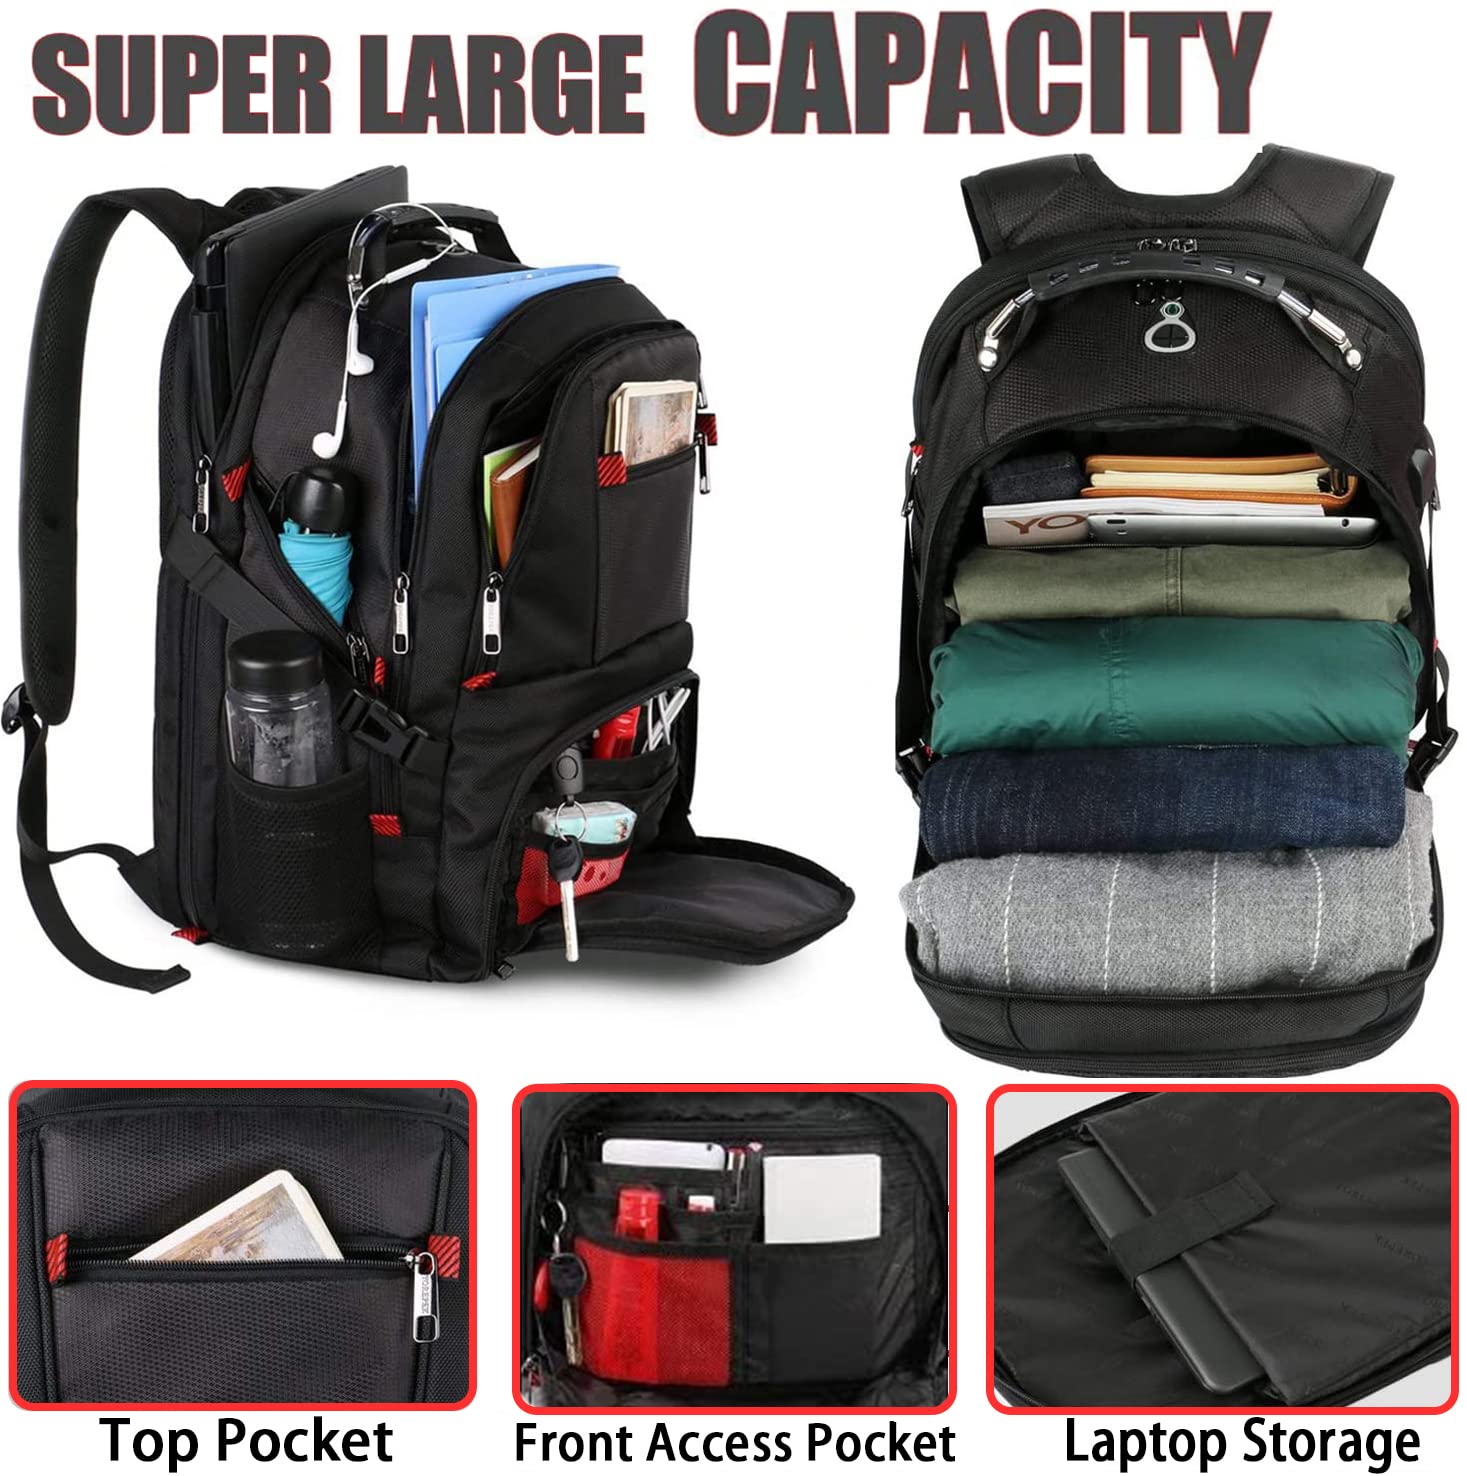 YOREPEK Travel Backpack & Soccer Backpack, Lightweight Soccer Bag with Ball Holder, Extra Large 50L Laptop Backpacks for Men Women, Water resistant Bag, Black